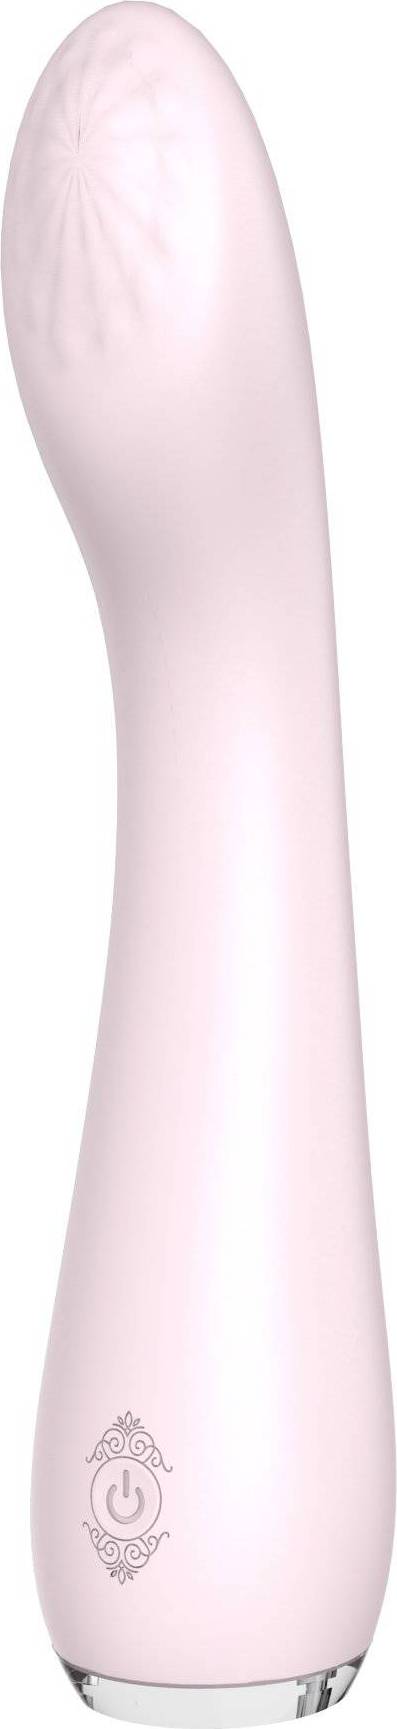  Bild på DreamToys Flexi G-Blossom vibrator